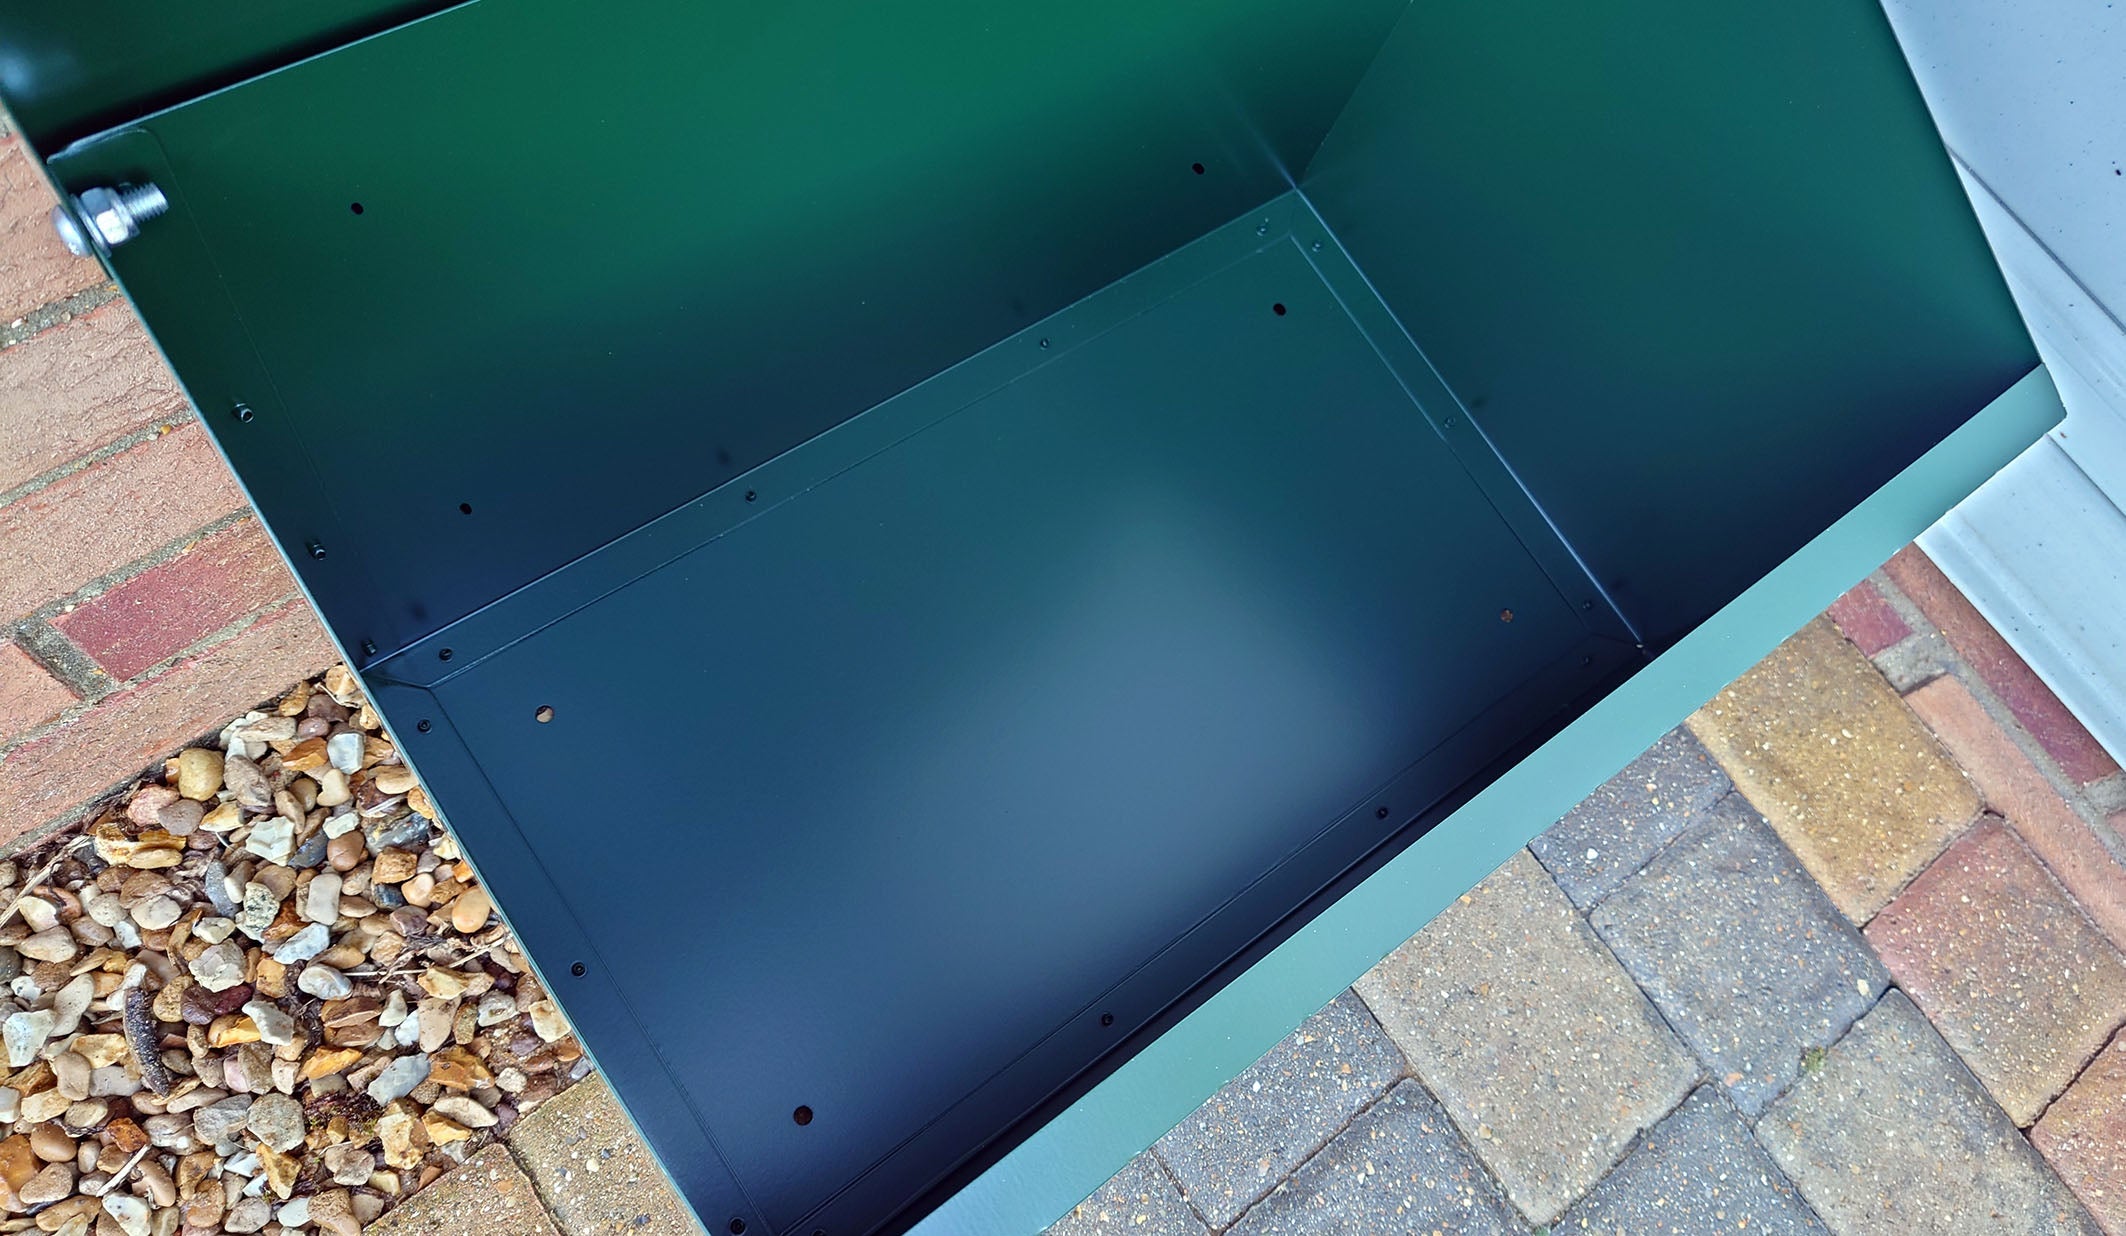 Secure Deliveries Lockable Parcel Drop Box - Indoor Outdoors